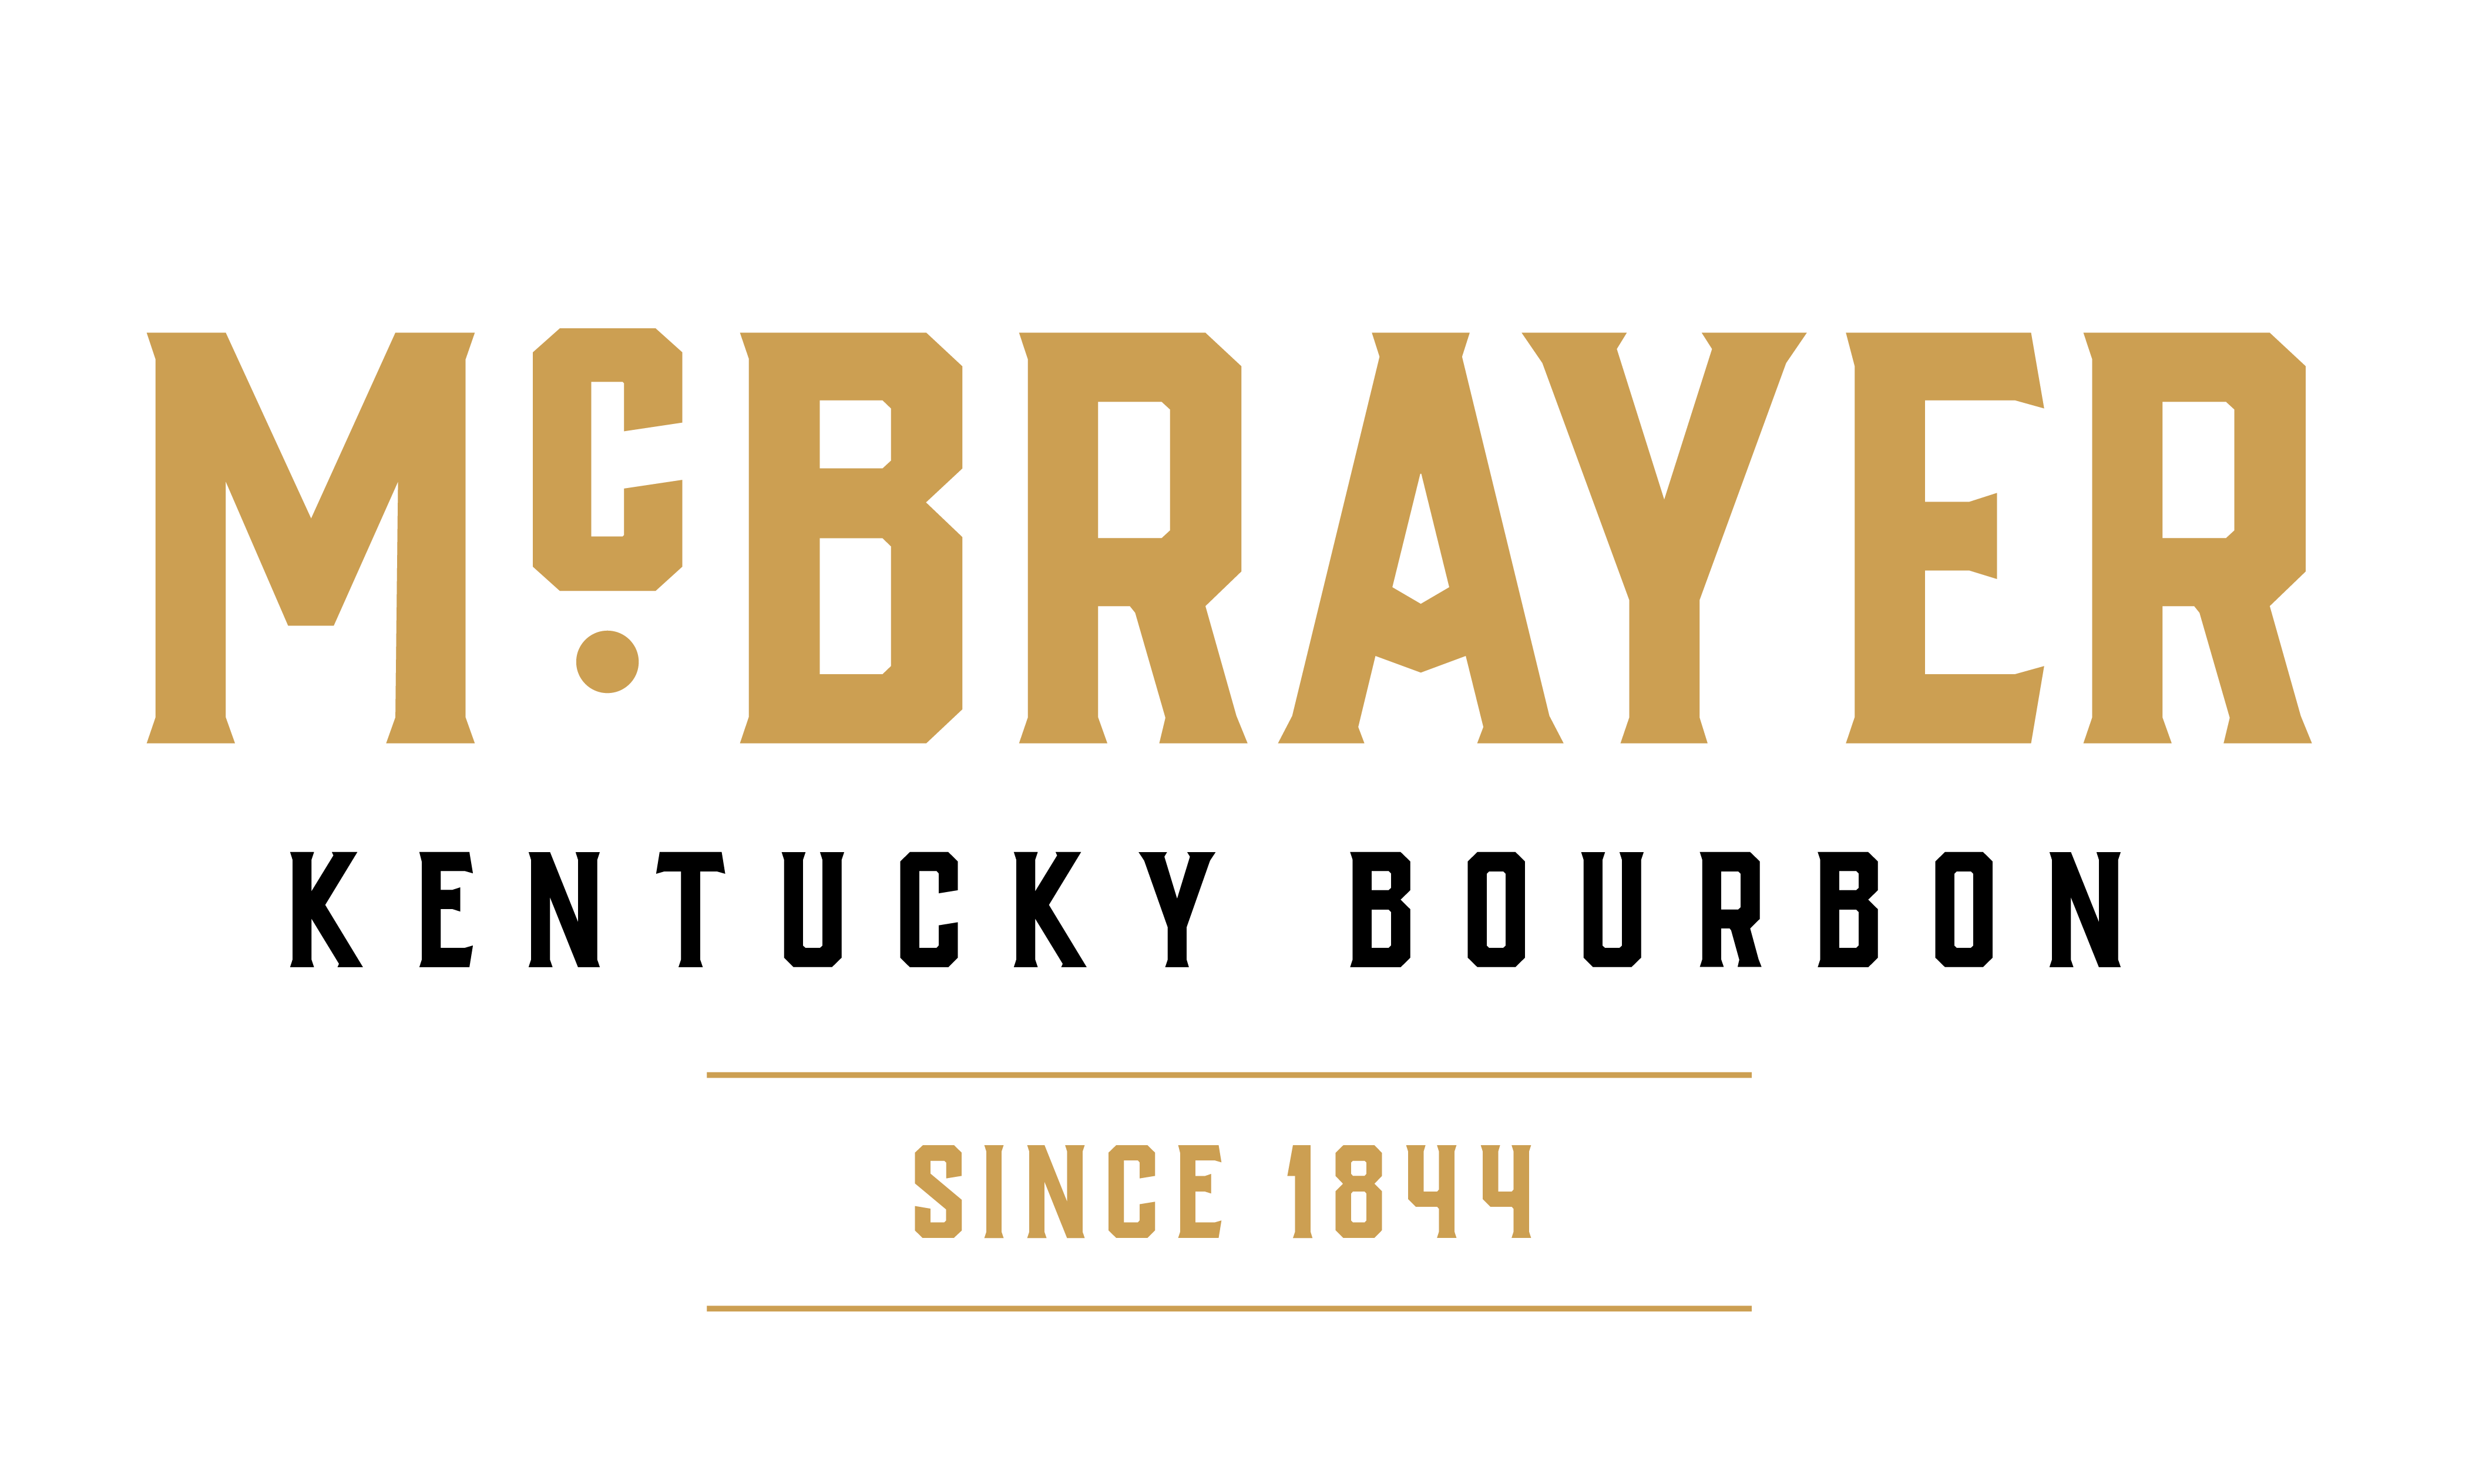 Mcbrayer KY Bourbon Since 1844